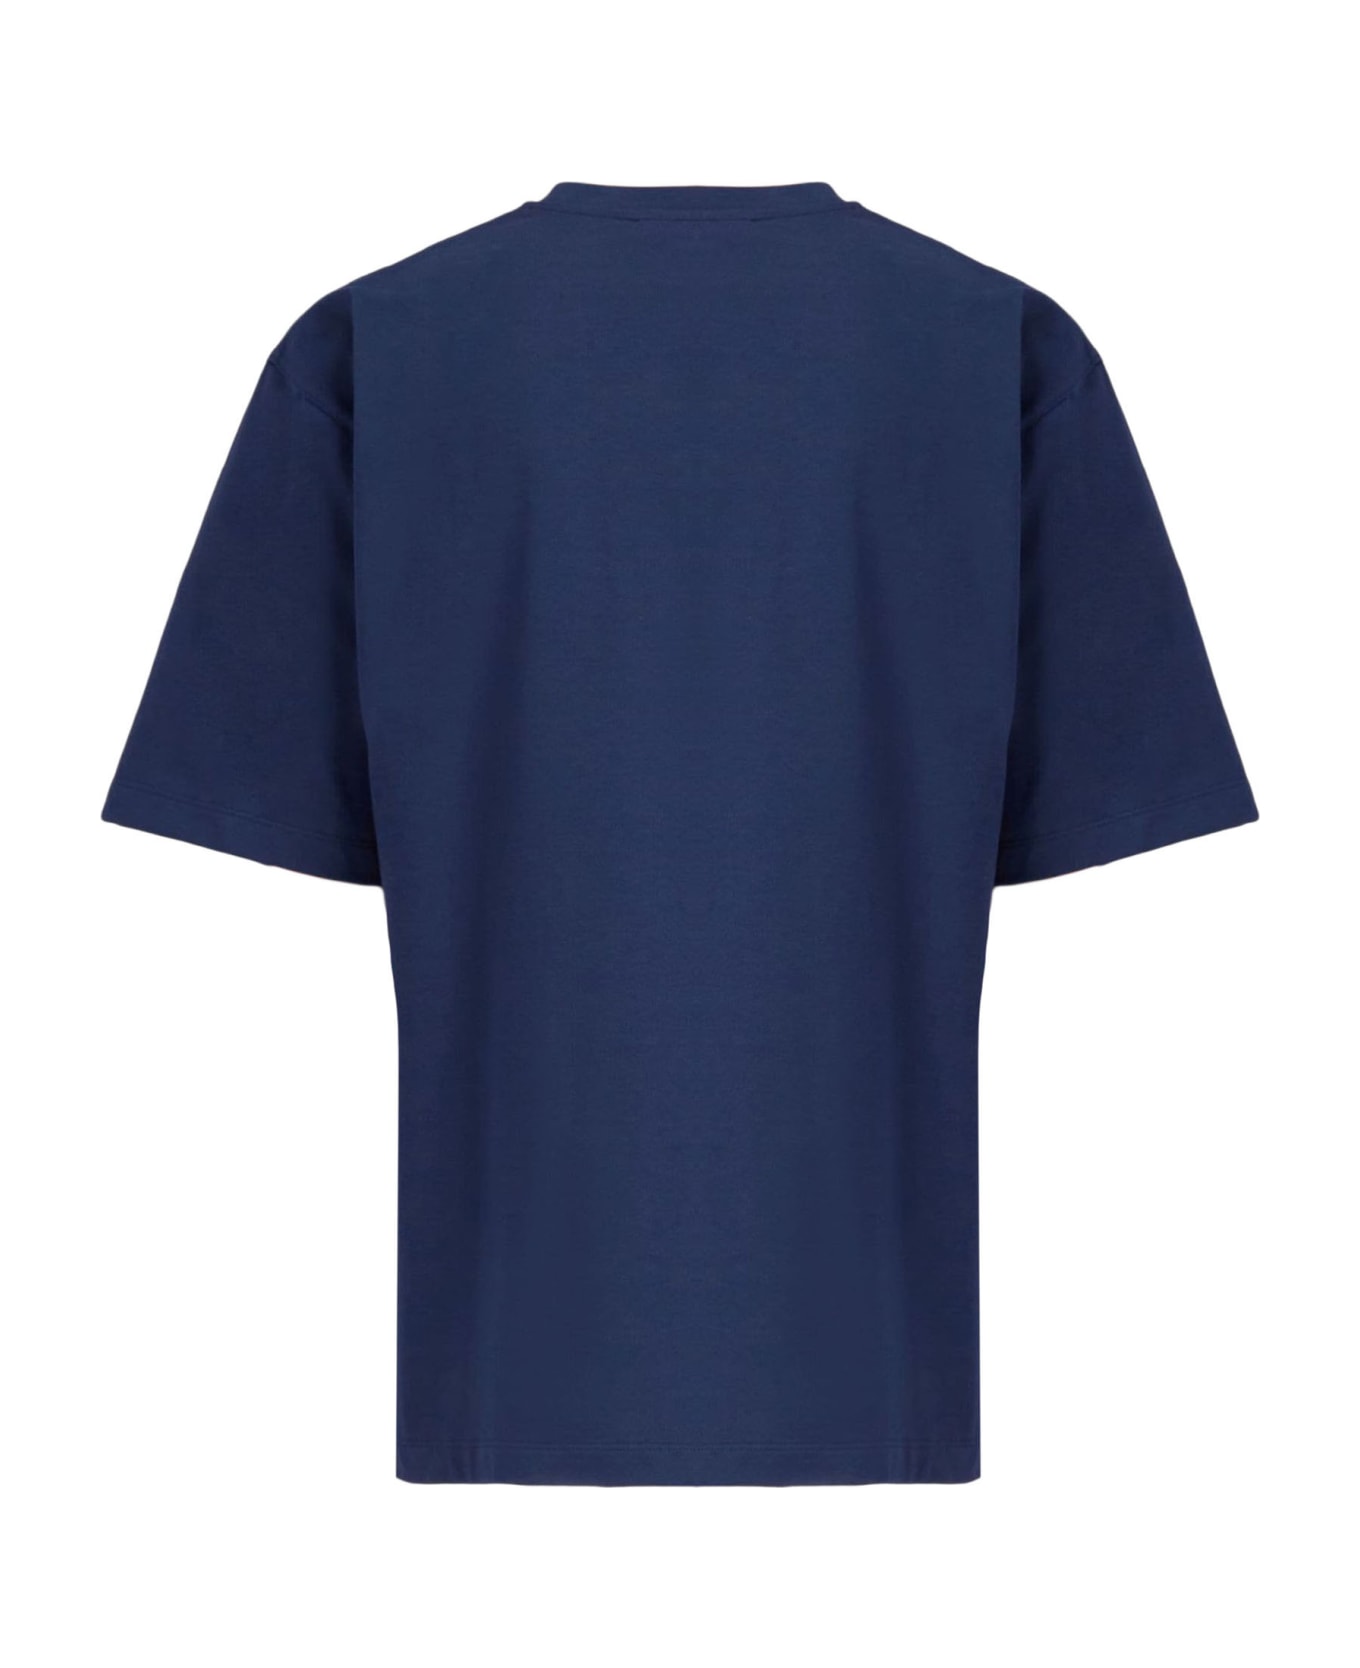 Marni Navy Blue Cotton T-shirt シャツ